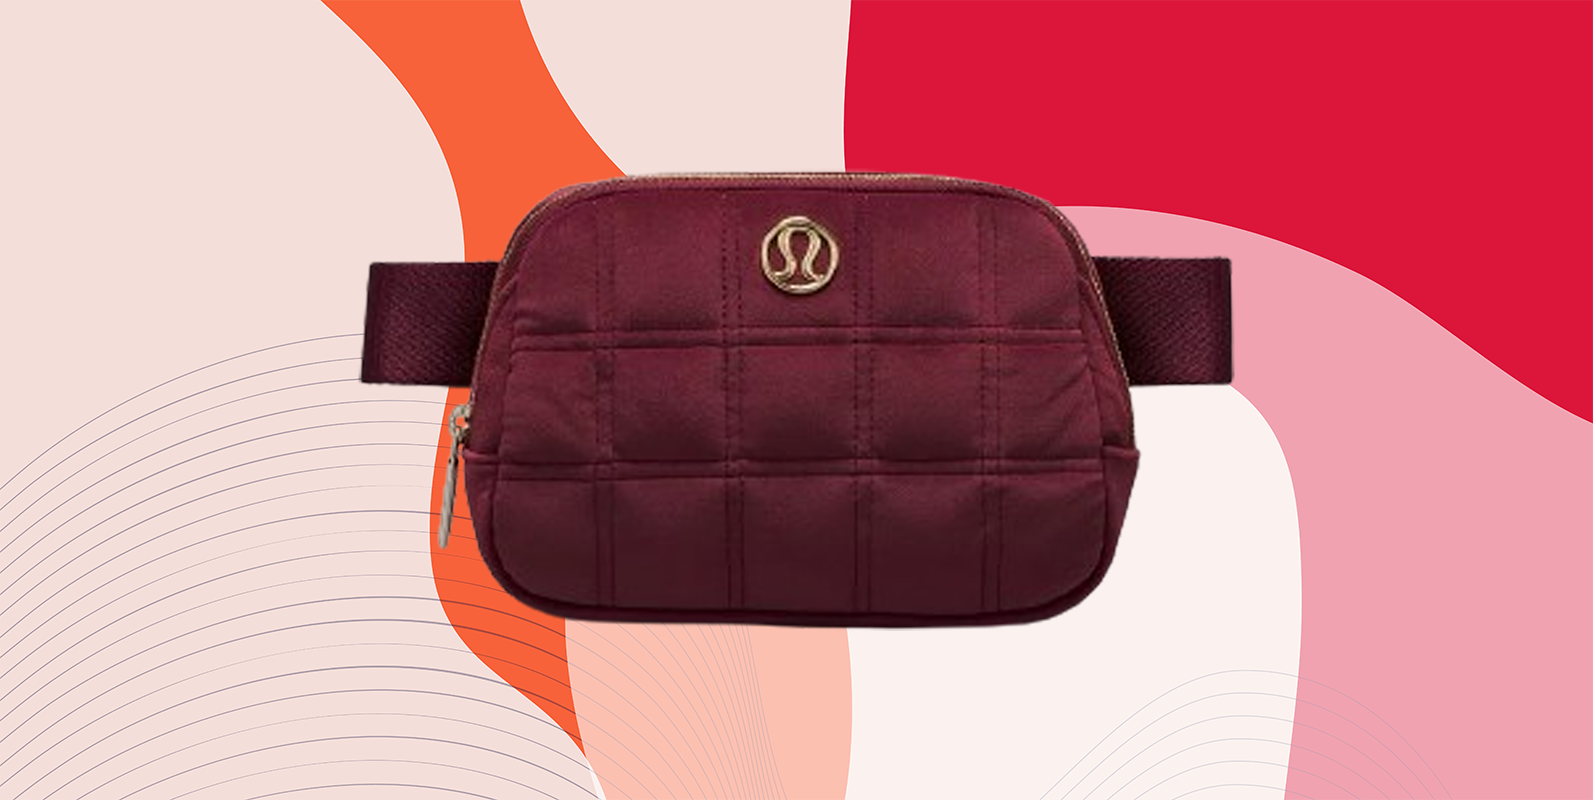 New Lulu bag alert 🚨 #beltbag #plussizeedition #curvy #aeriereal #rev